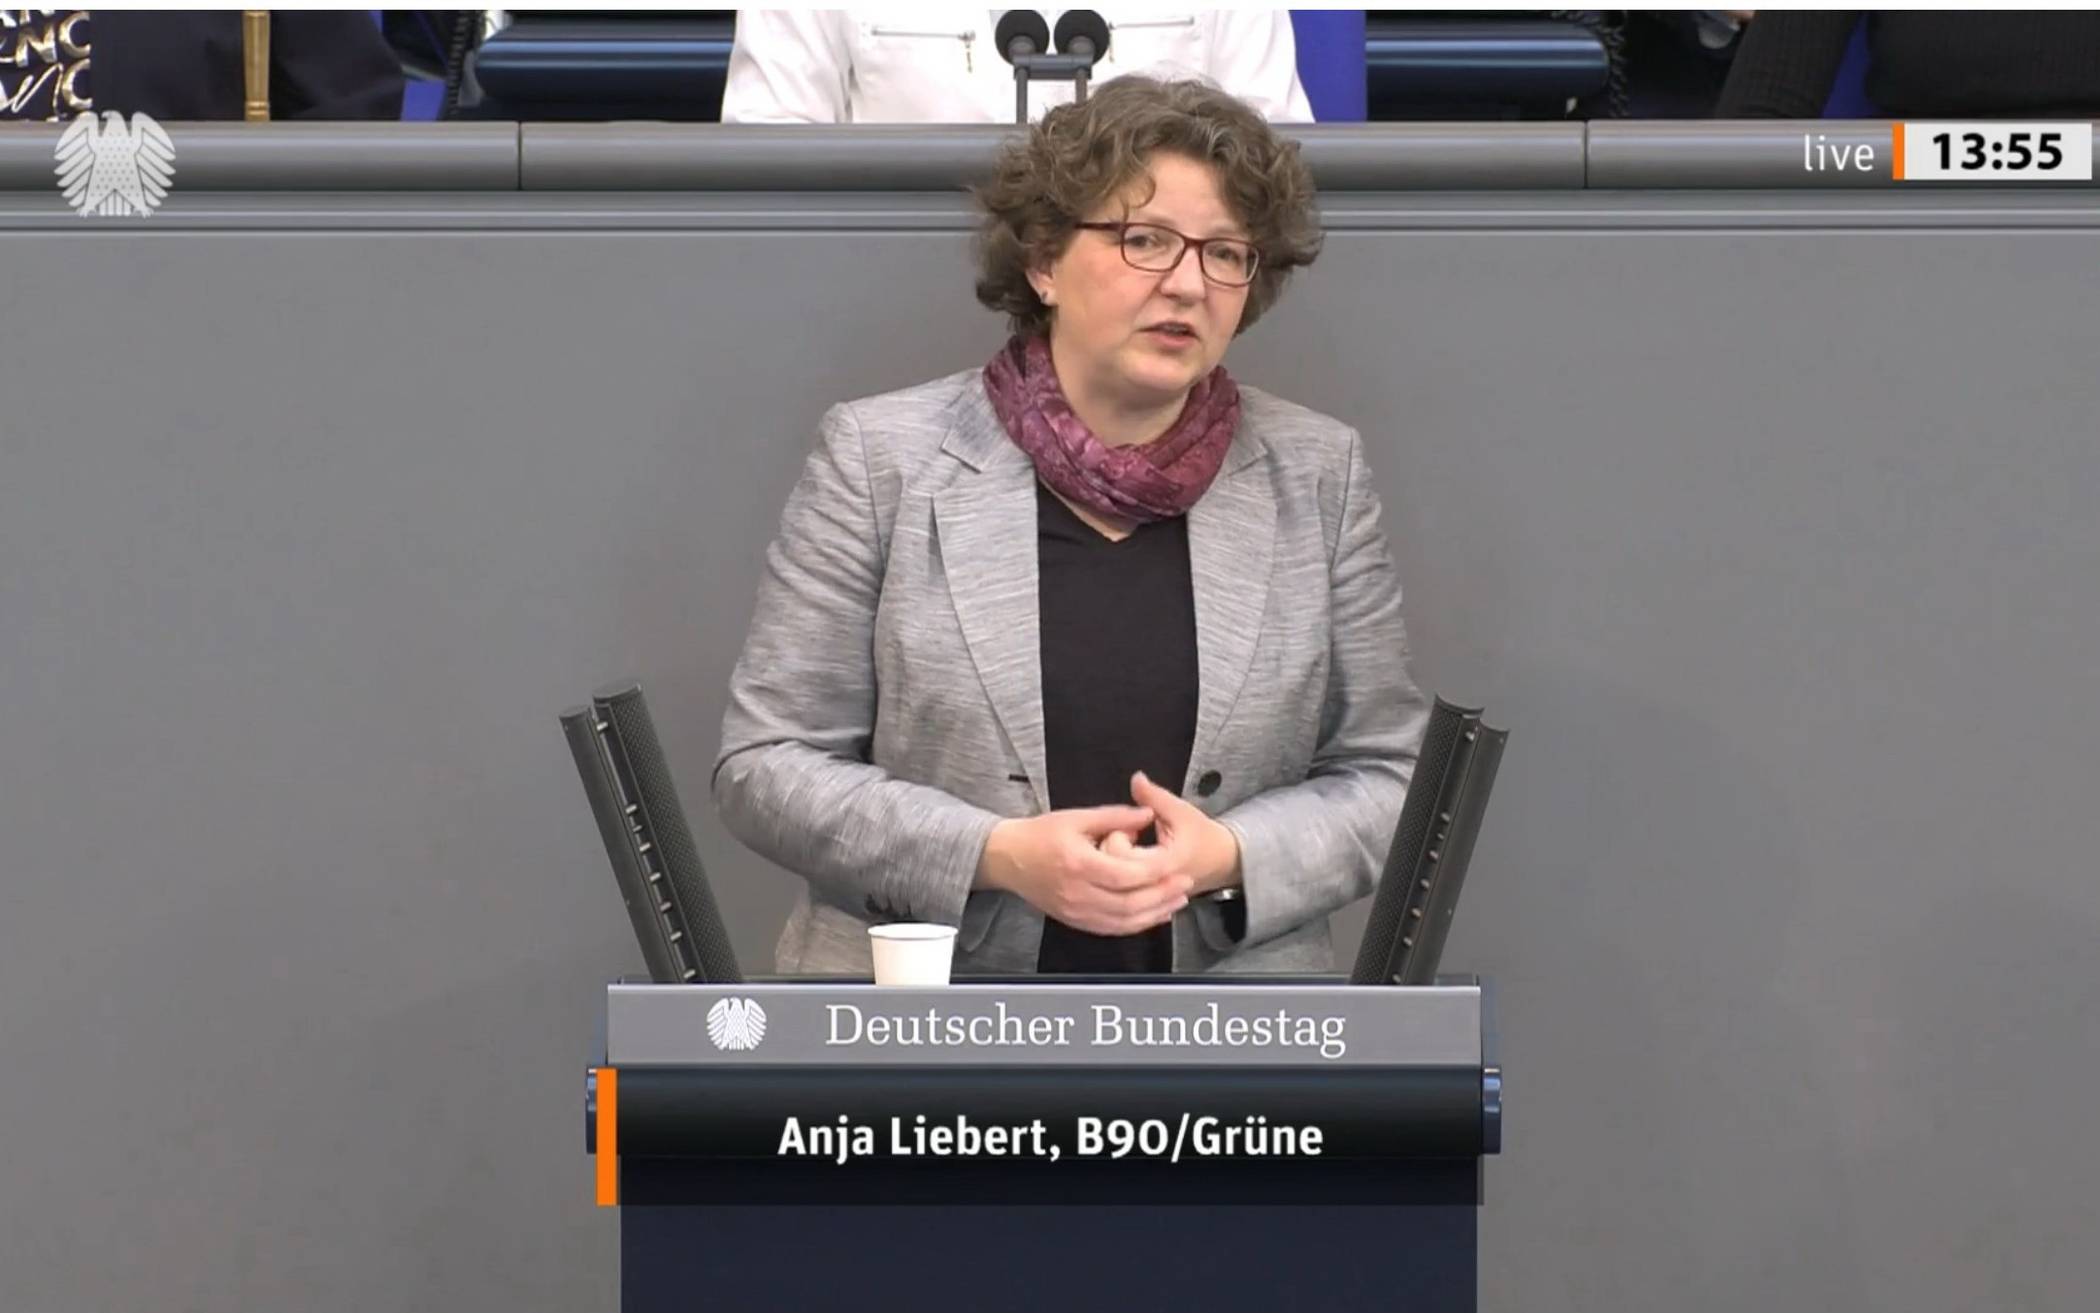  Anja Liebert im Bundestag. 